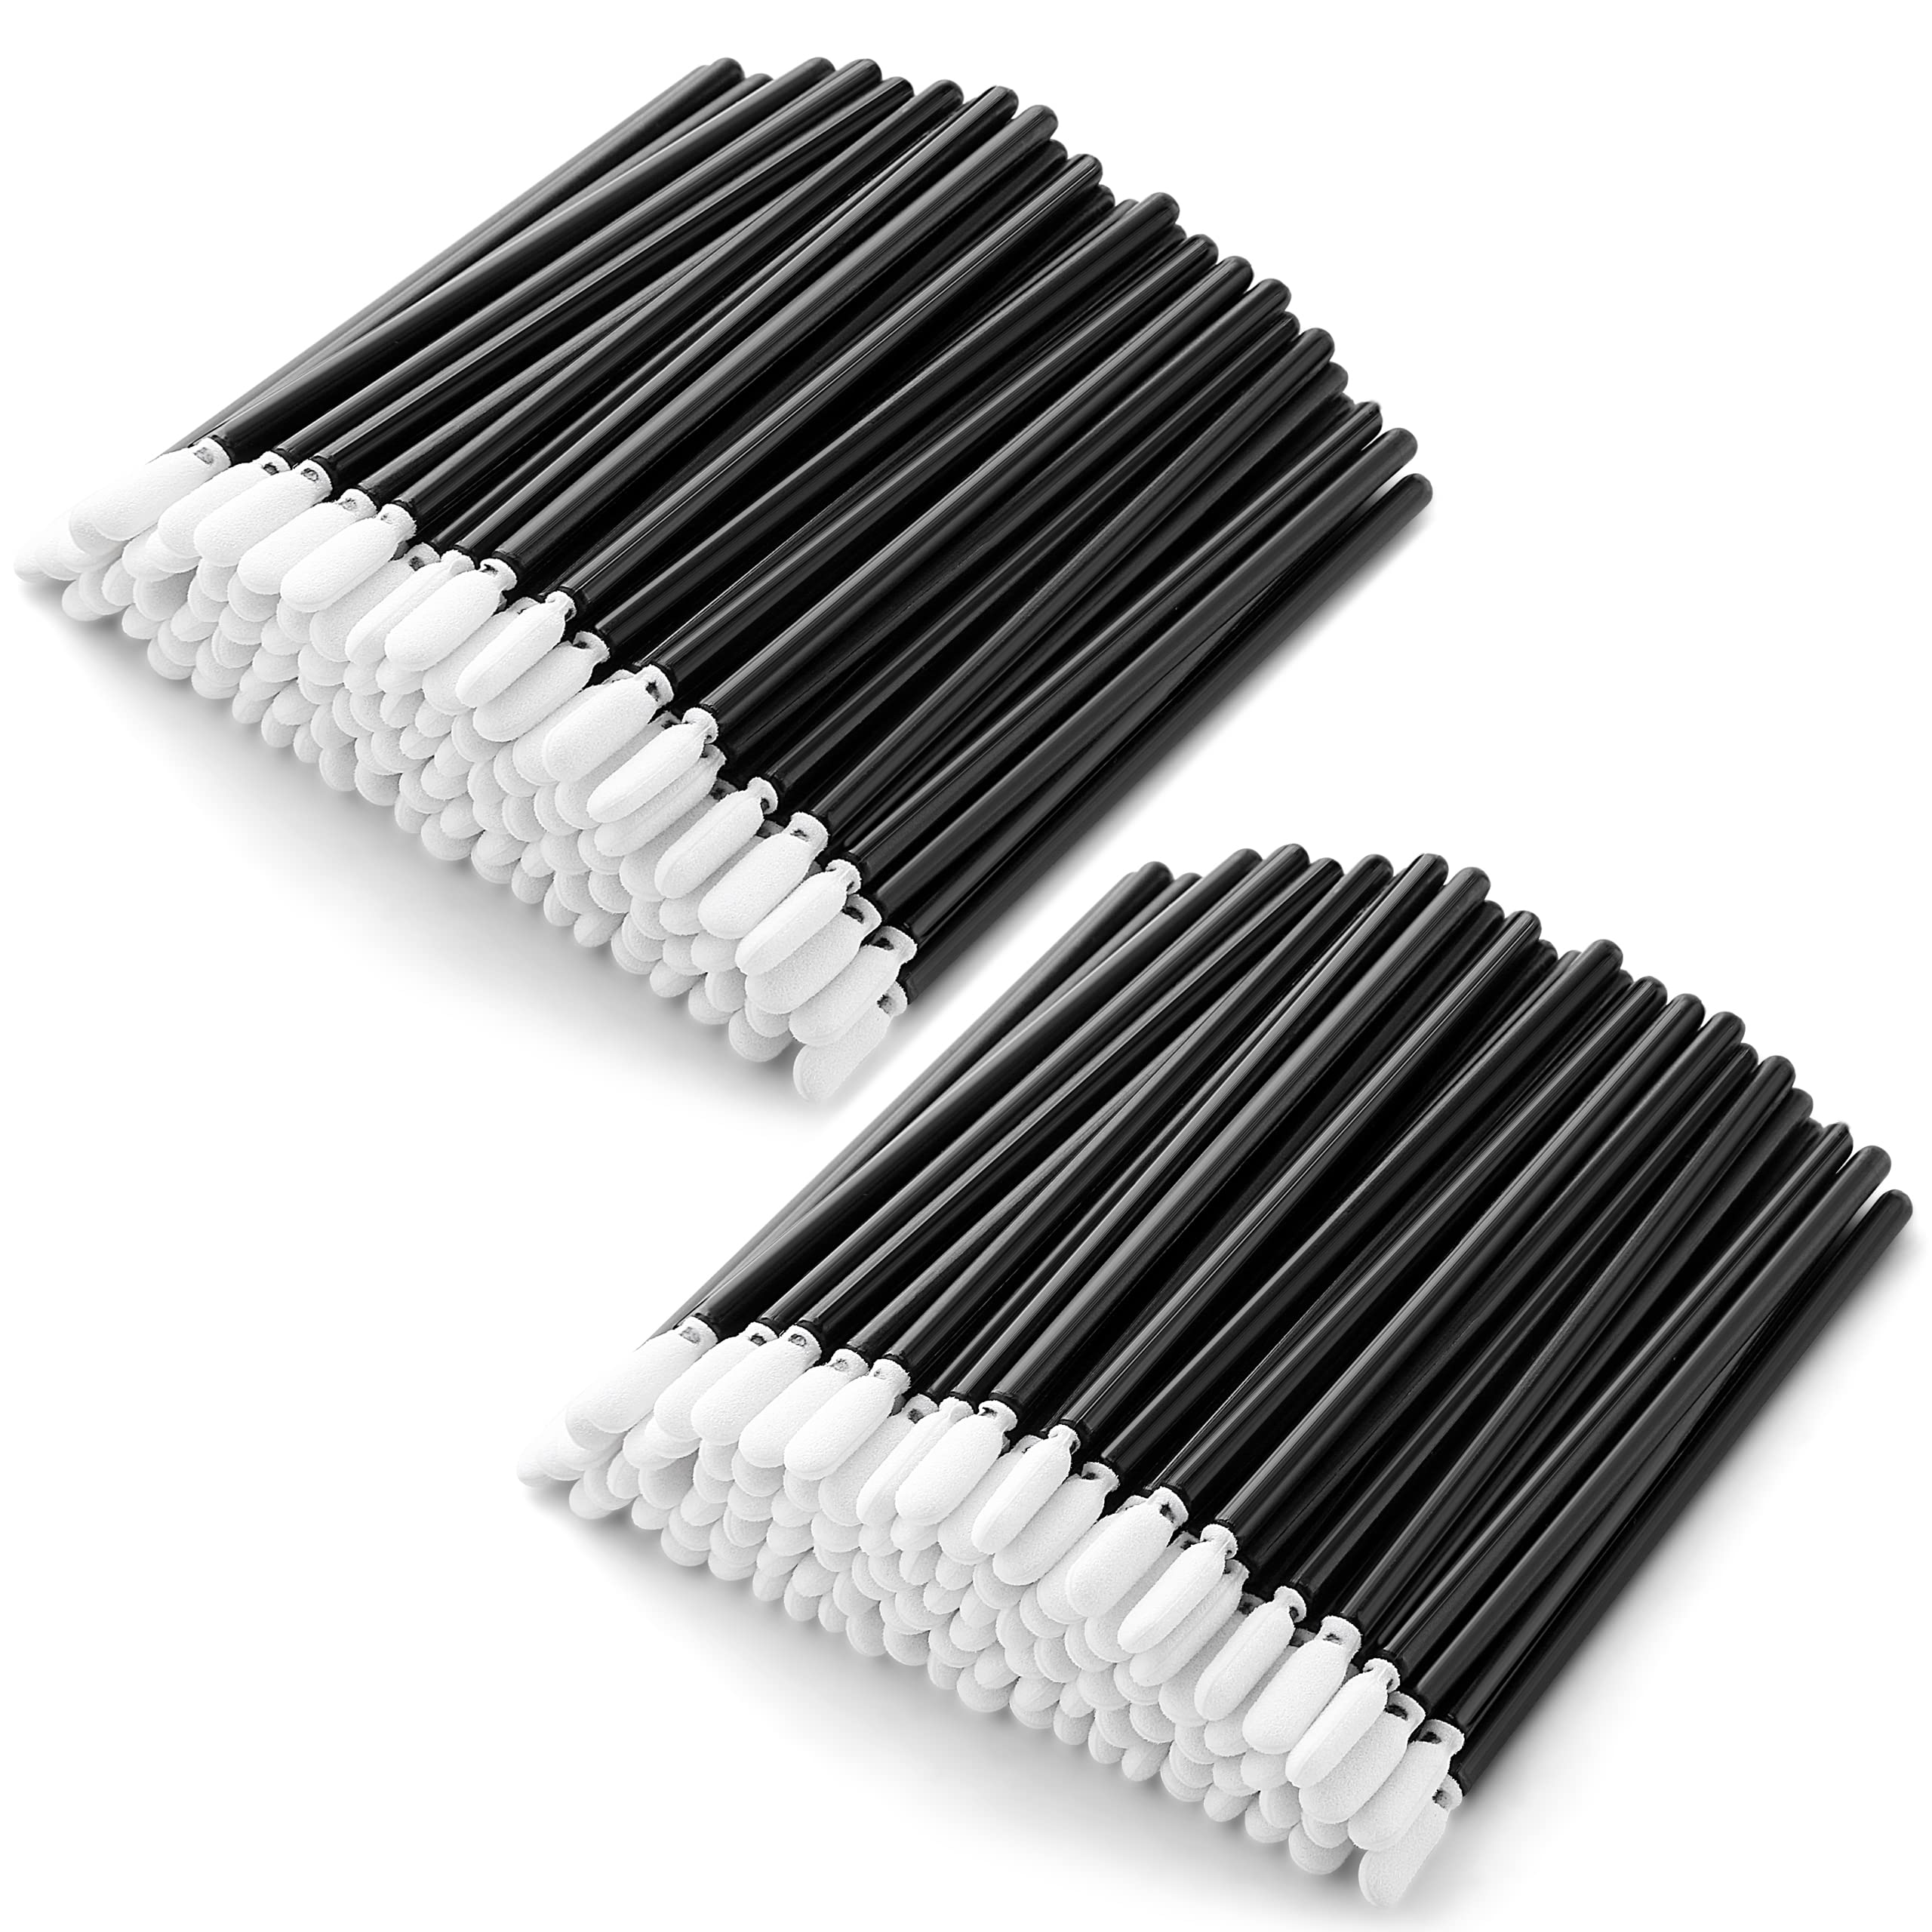 Foam Cleaning Swabs Sponge Sticks (1,000pcs with 3.4mm Round Foam Tips) (No. C709C)